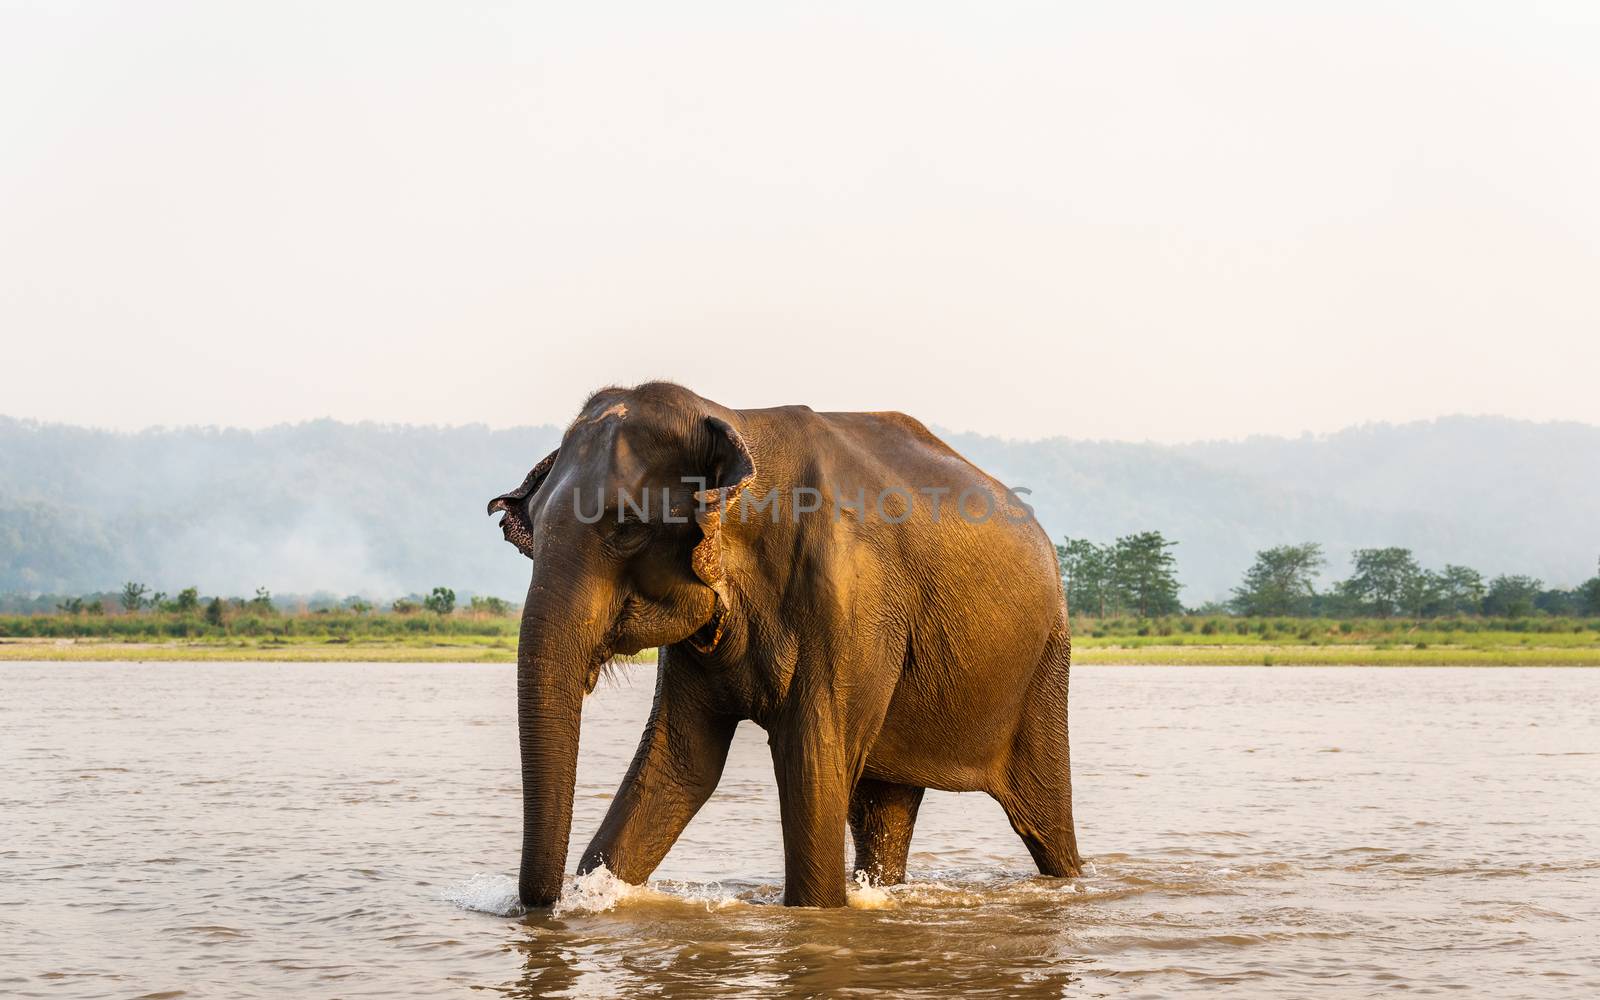 Elephant in the Gandak river in Chitwan National Park, Nepal by dutourdumonde